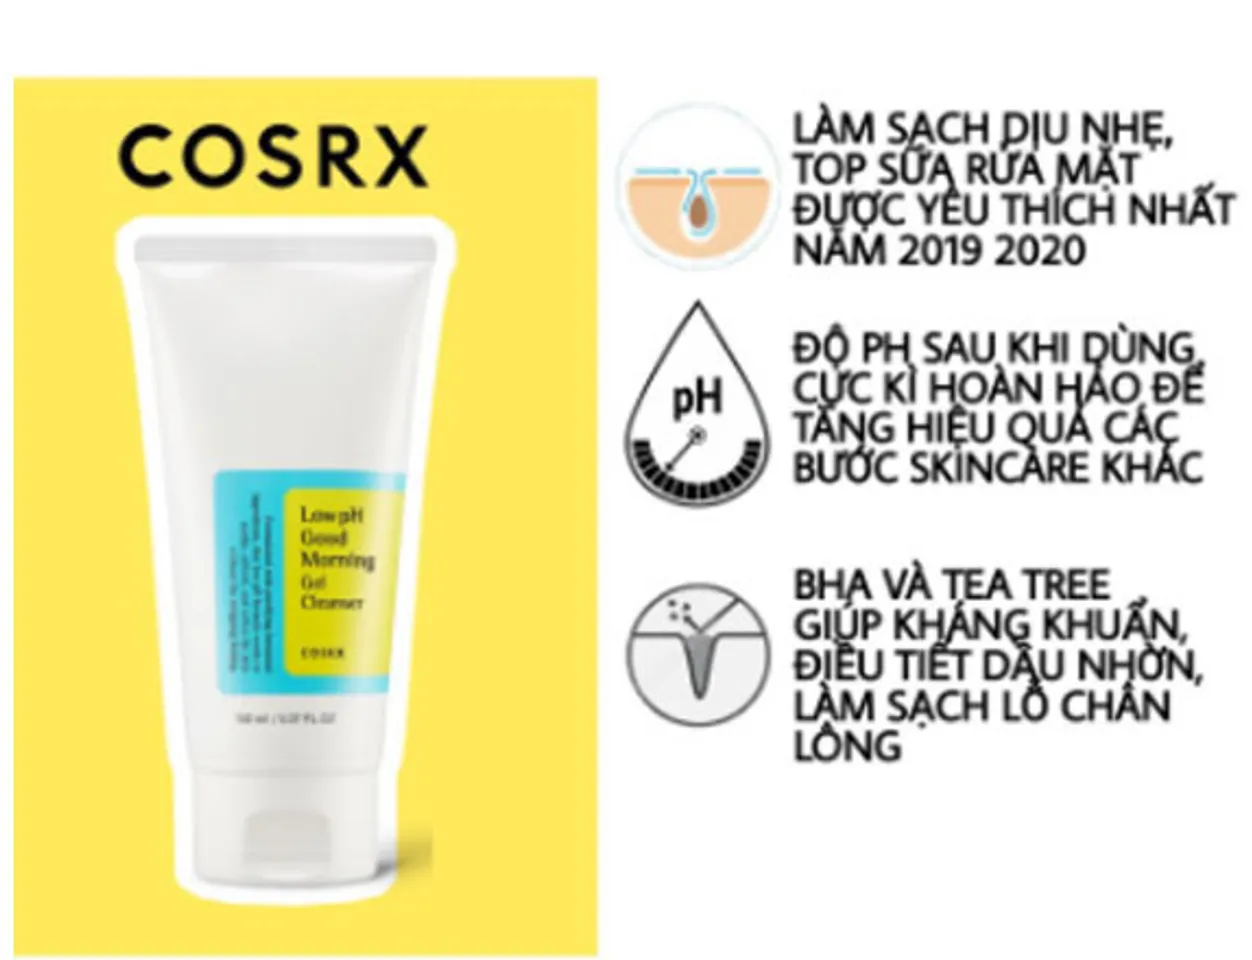 Sữa rửa mặt Cosrx dùng cho da gì?